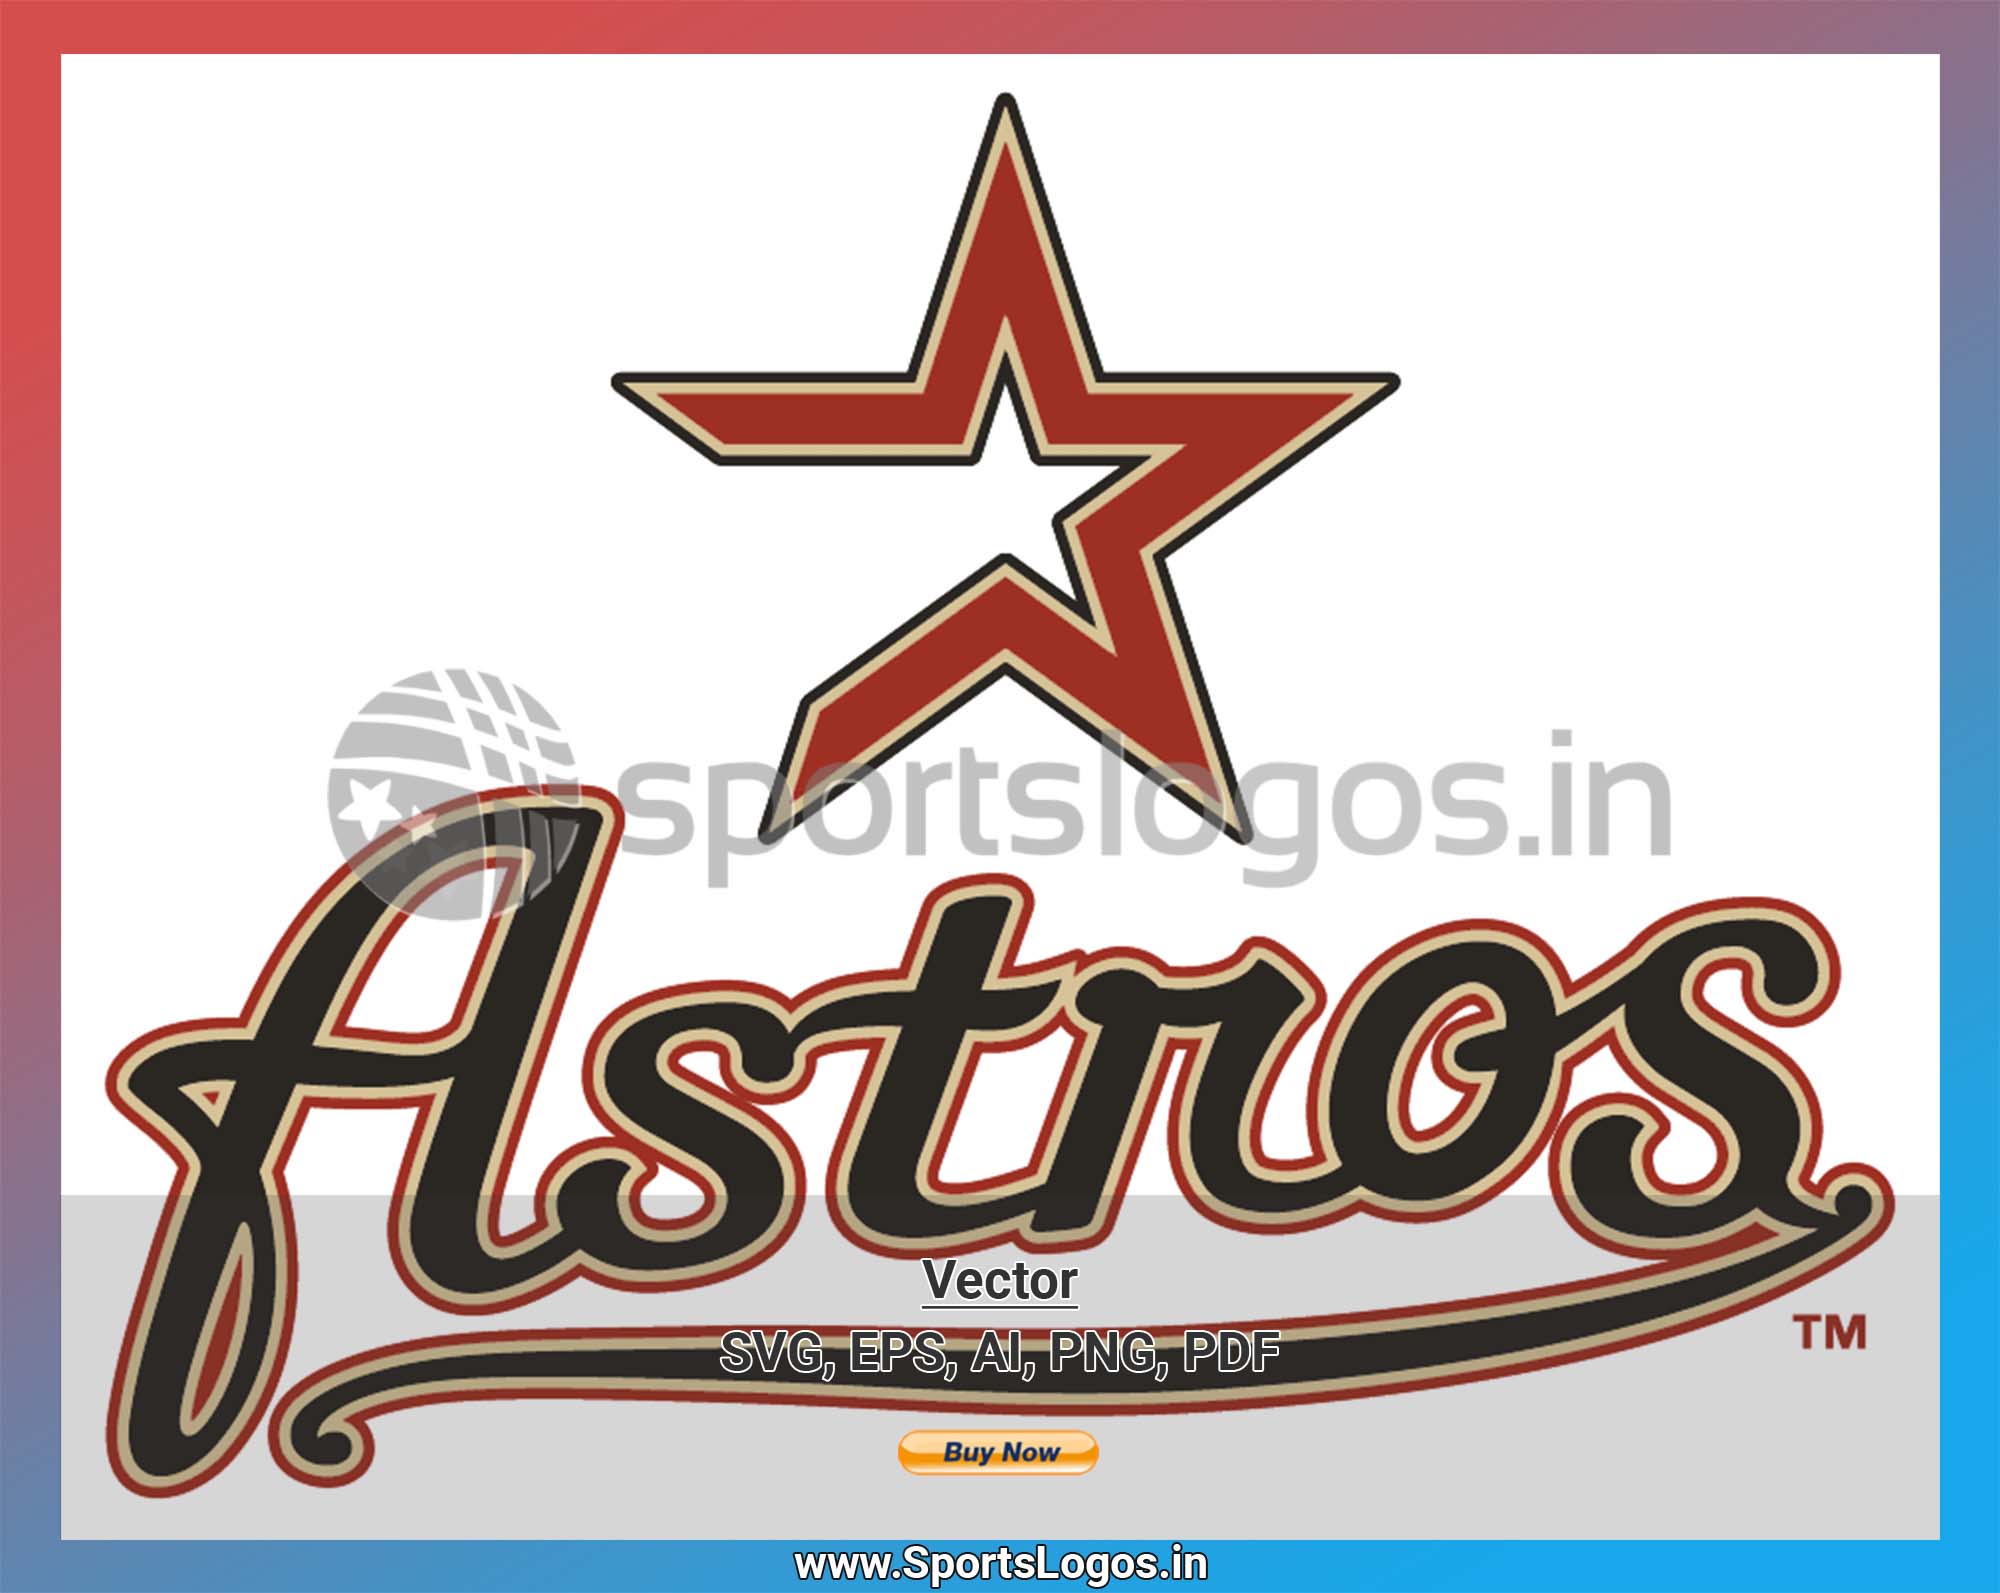 Houston Astros Logo SVG Cut File - Free Sports Logo Downloads